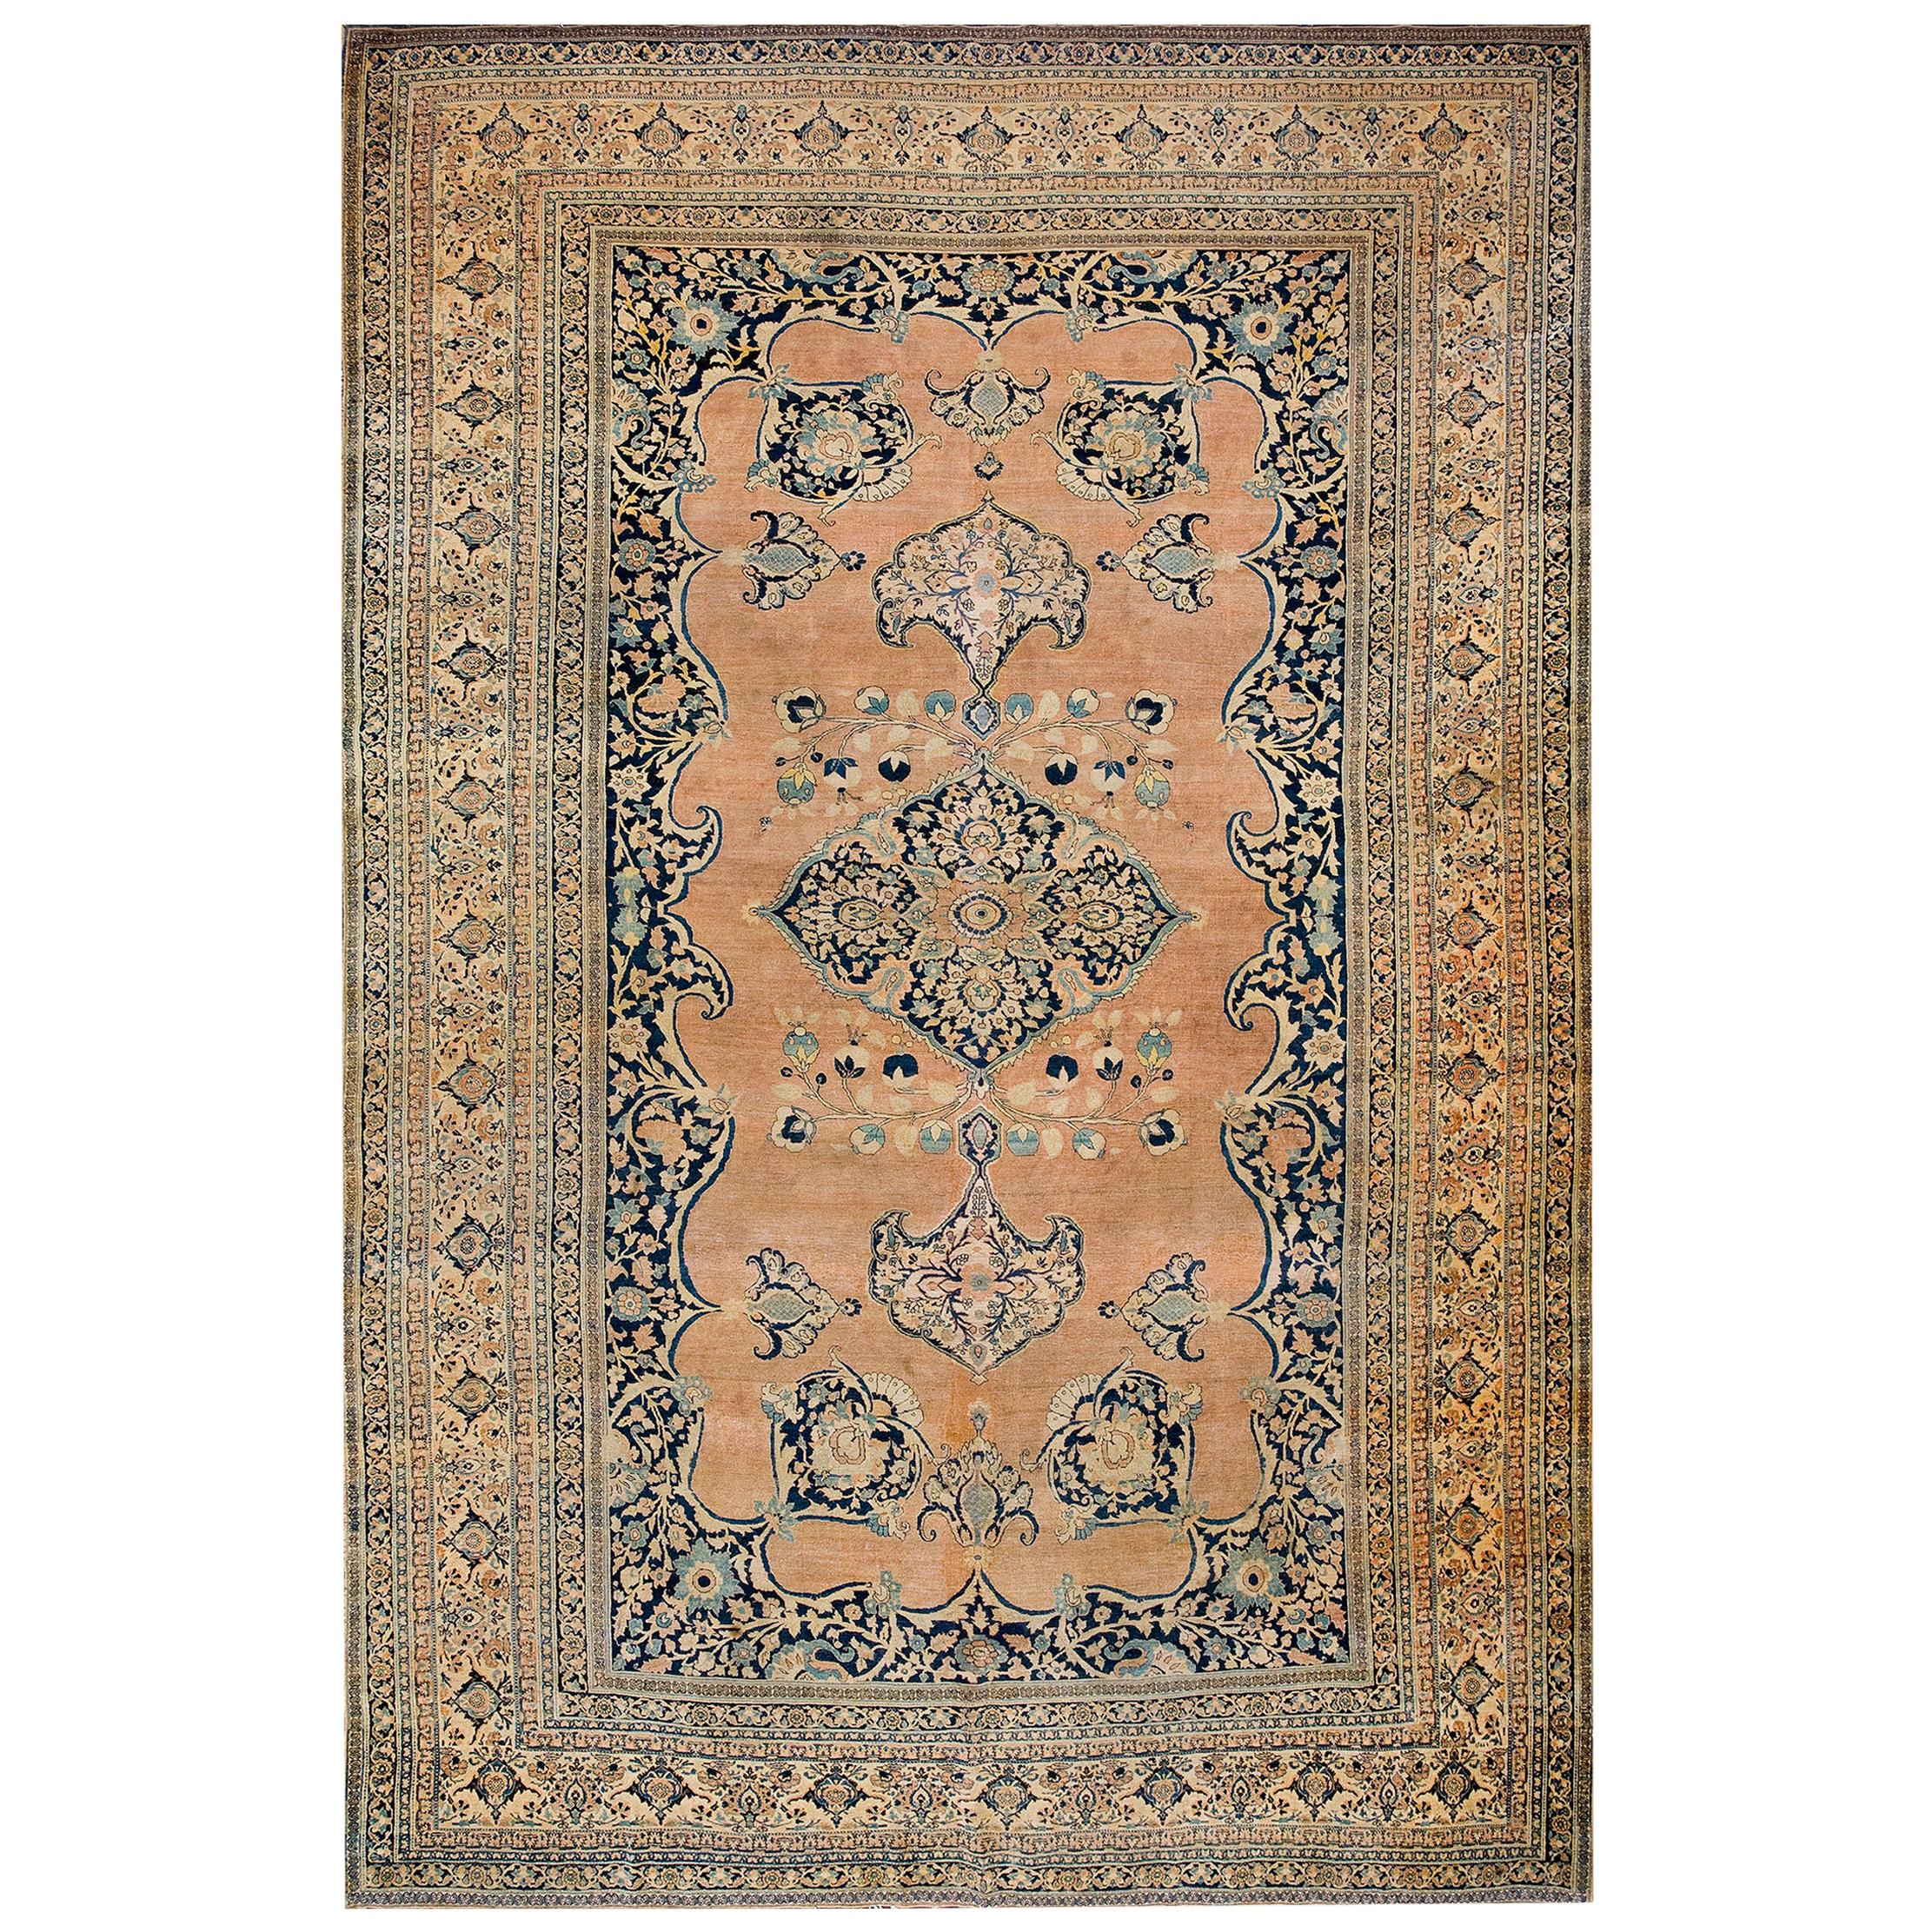 19th Century Persian Tabriz Haji Jalili Carpet ( 9'6" x 13'10" - 290 x 422 ) For Sale